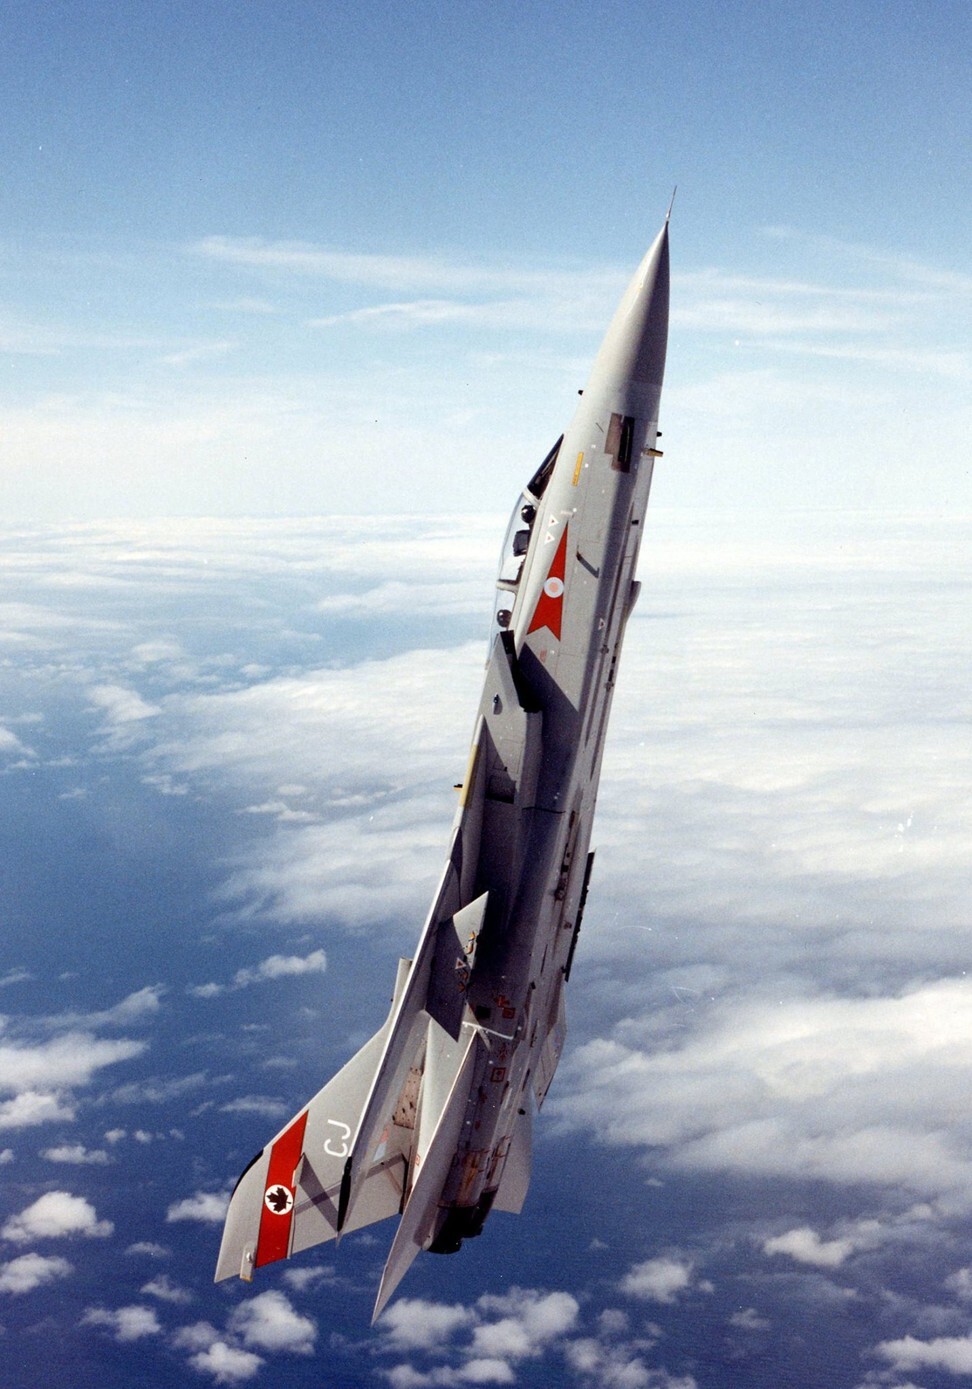 A Tornado F3 aircraft. Photo: courtesy of David Newbery